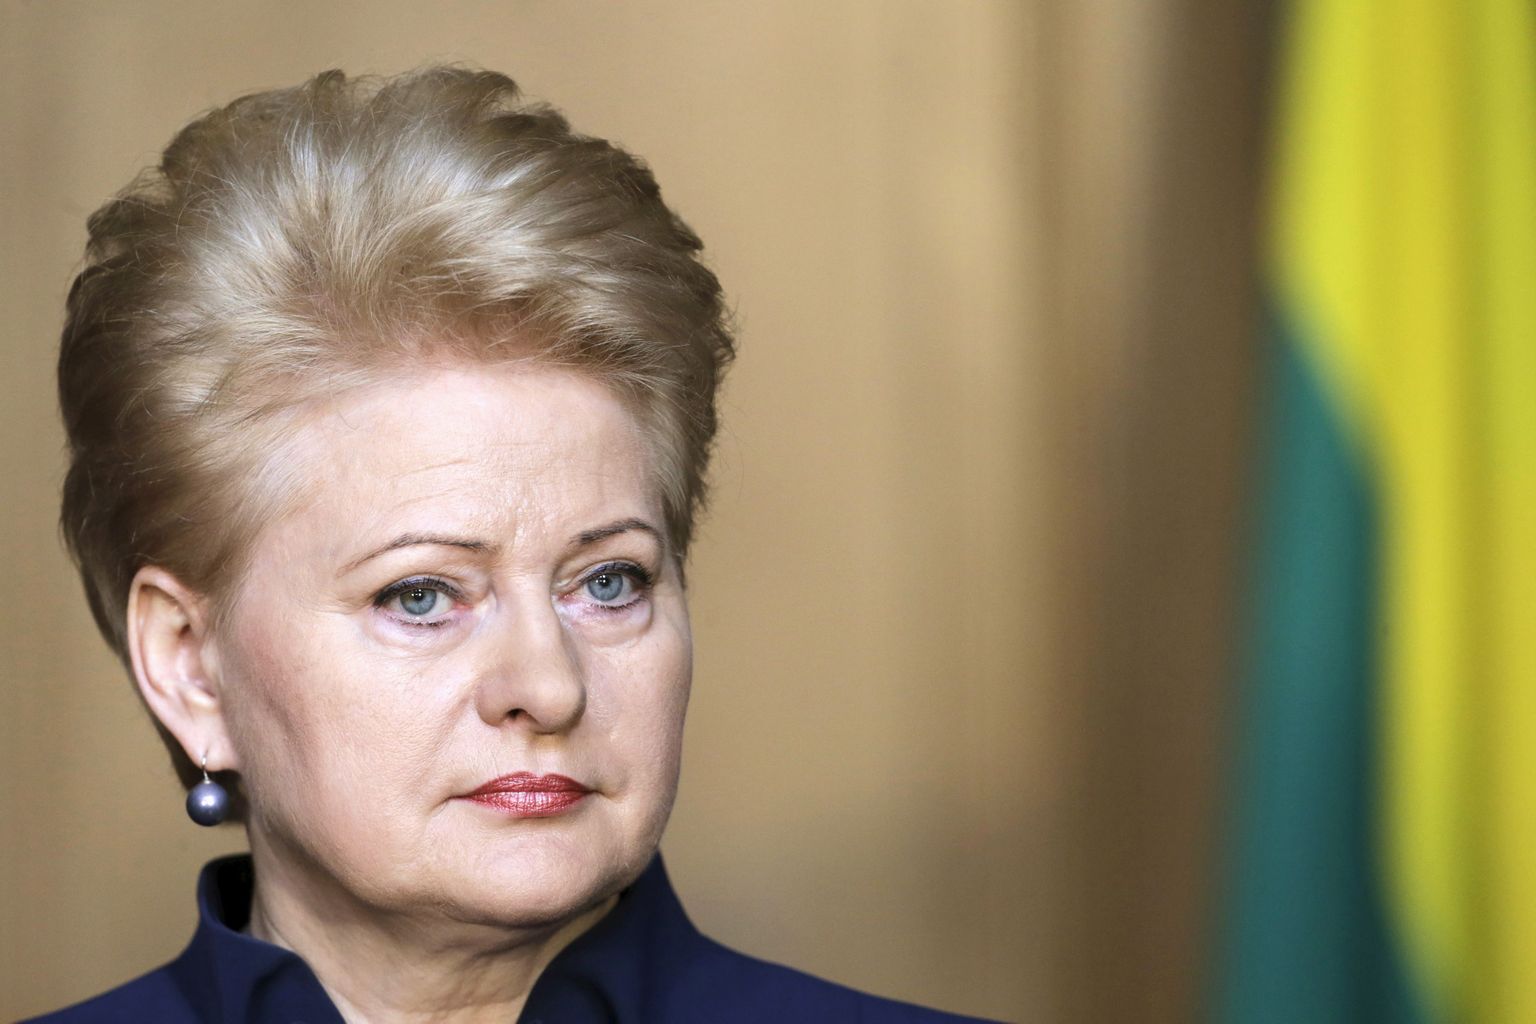 Leedu president Dalia Grybauskaite